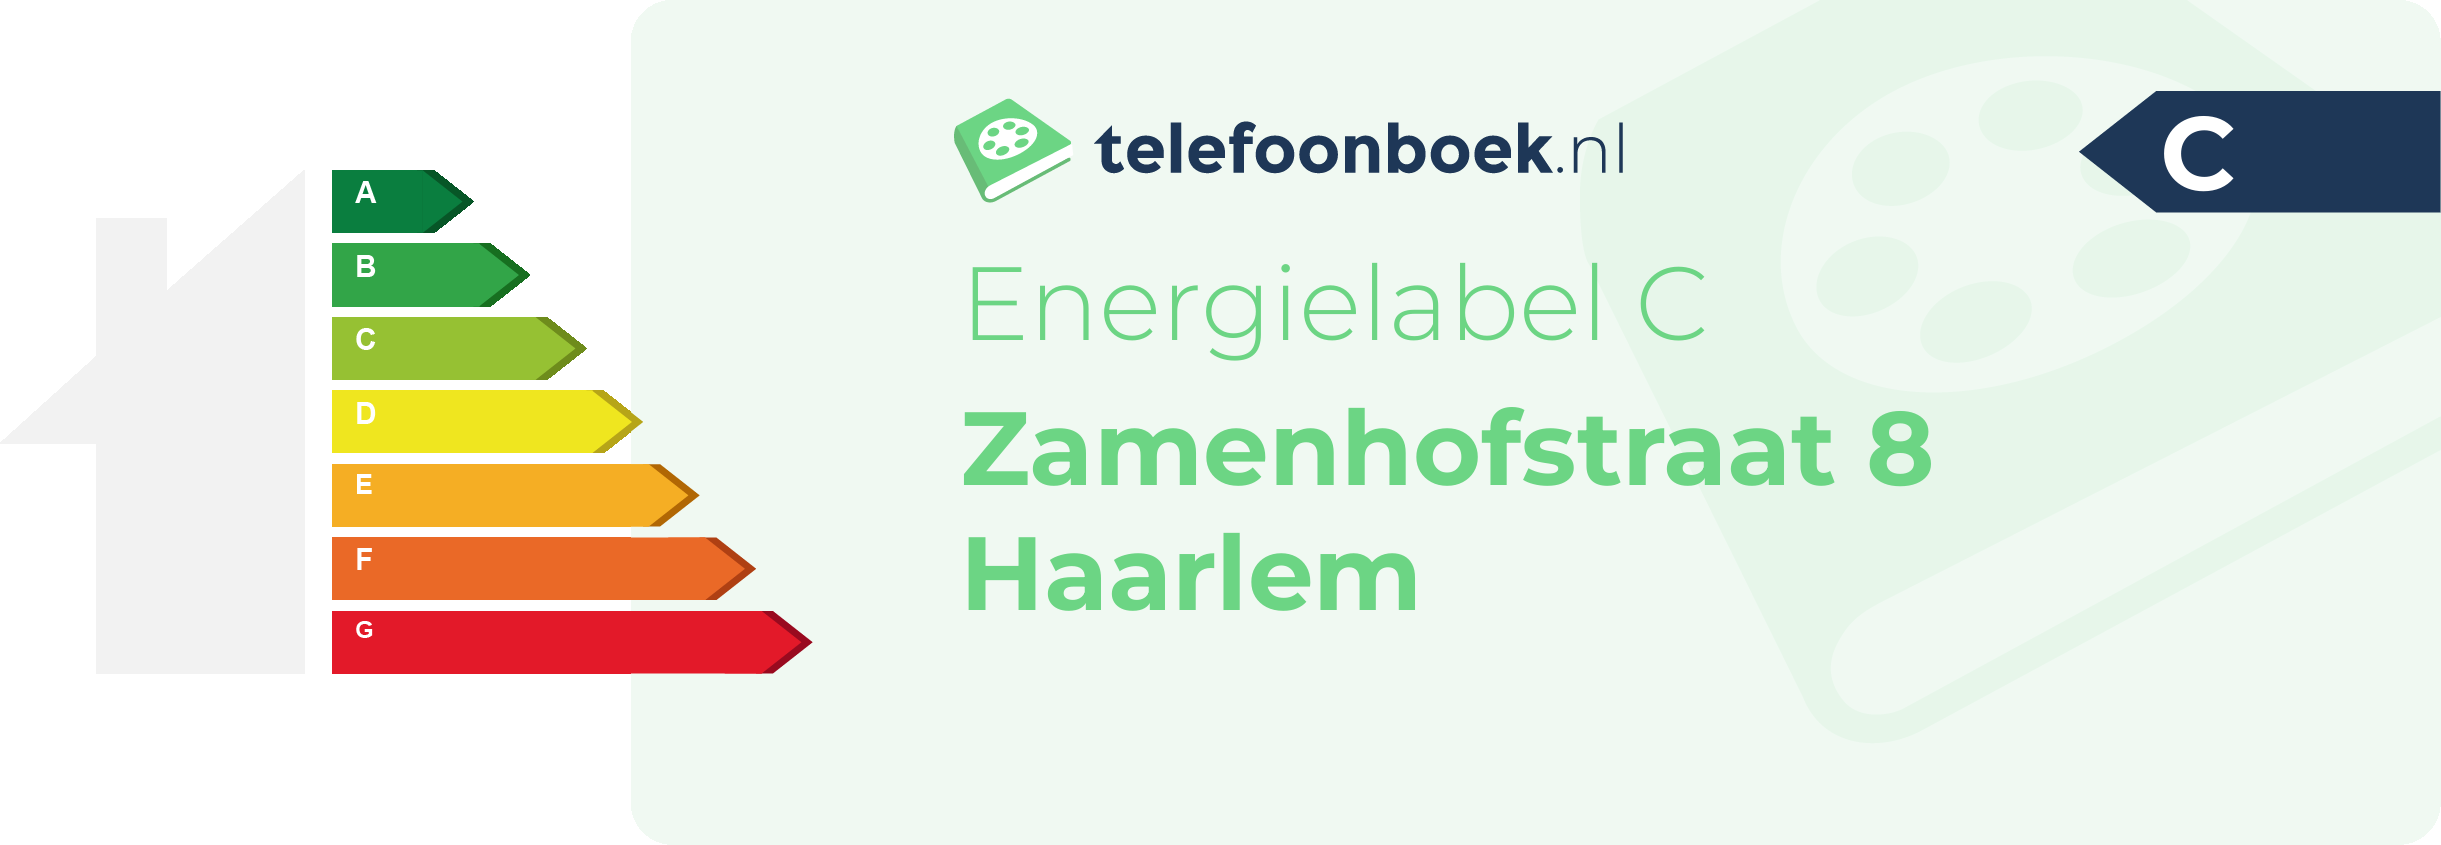 Energielabel Zamenhofstraat 8 Haarlem